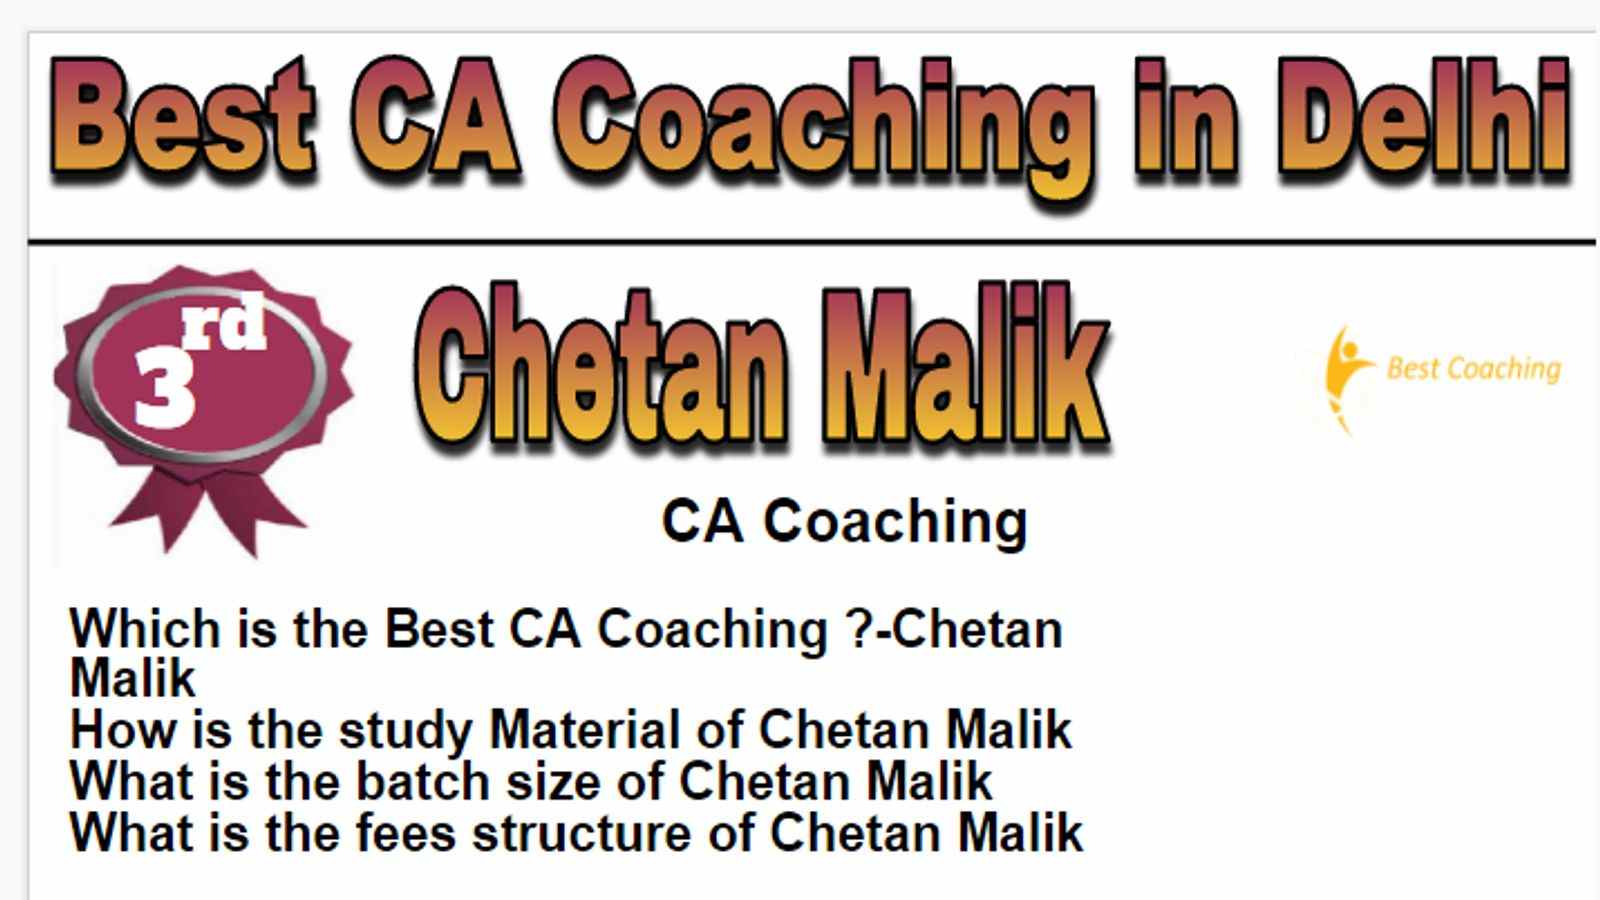 Rank 3 Best CA Coaching in Delhi